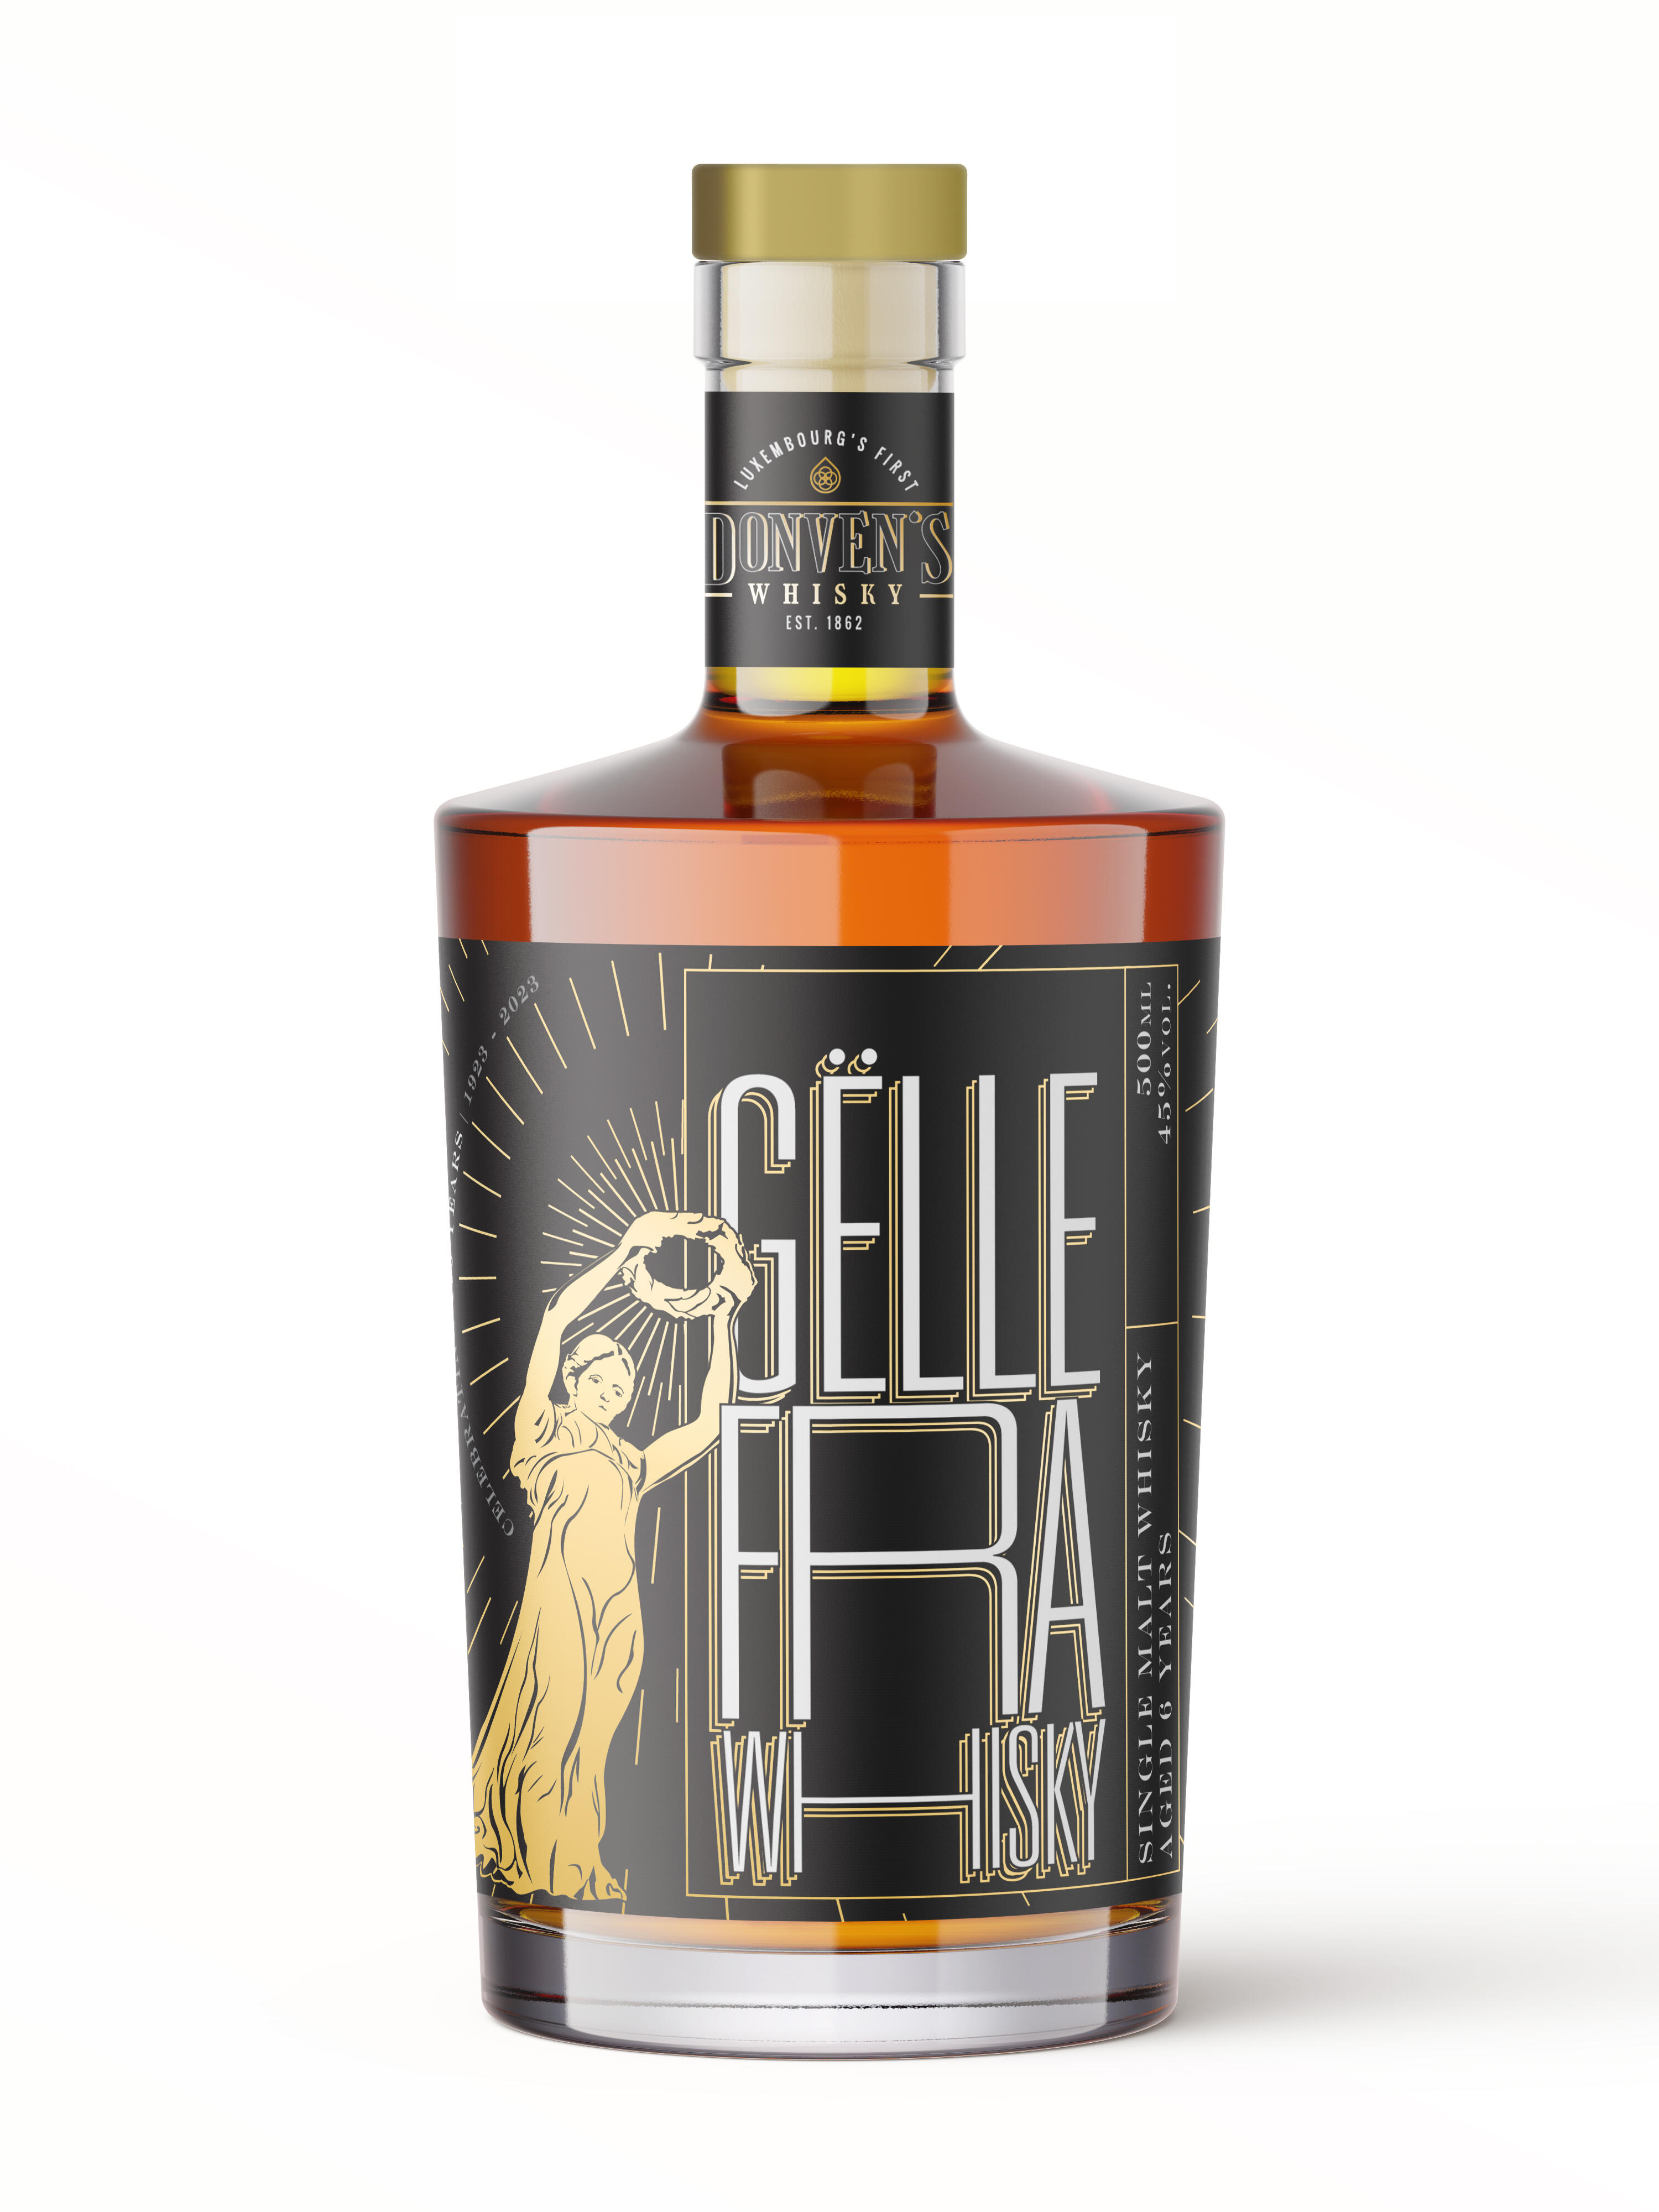 DIEDENACKER Gëlle Fra Single Malt Whisky 6 years 50cl